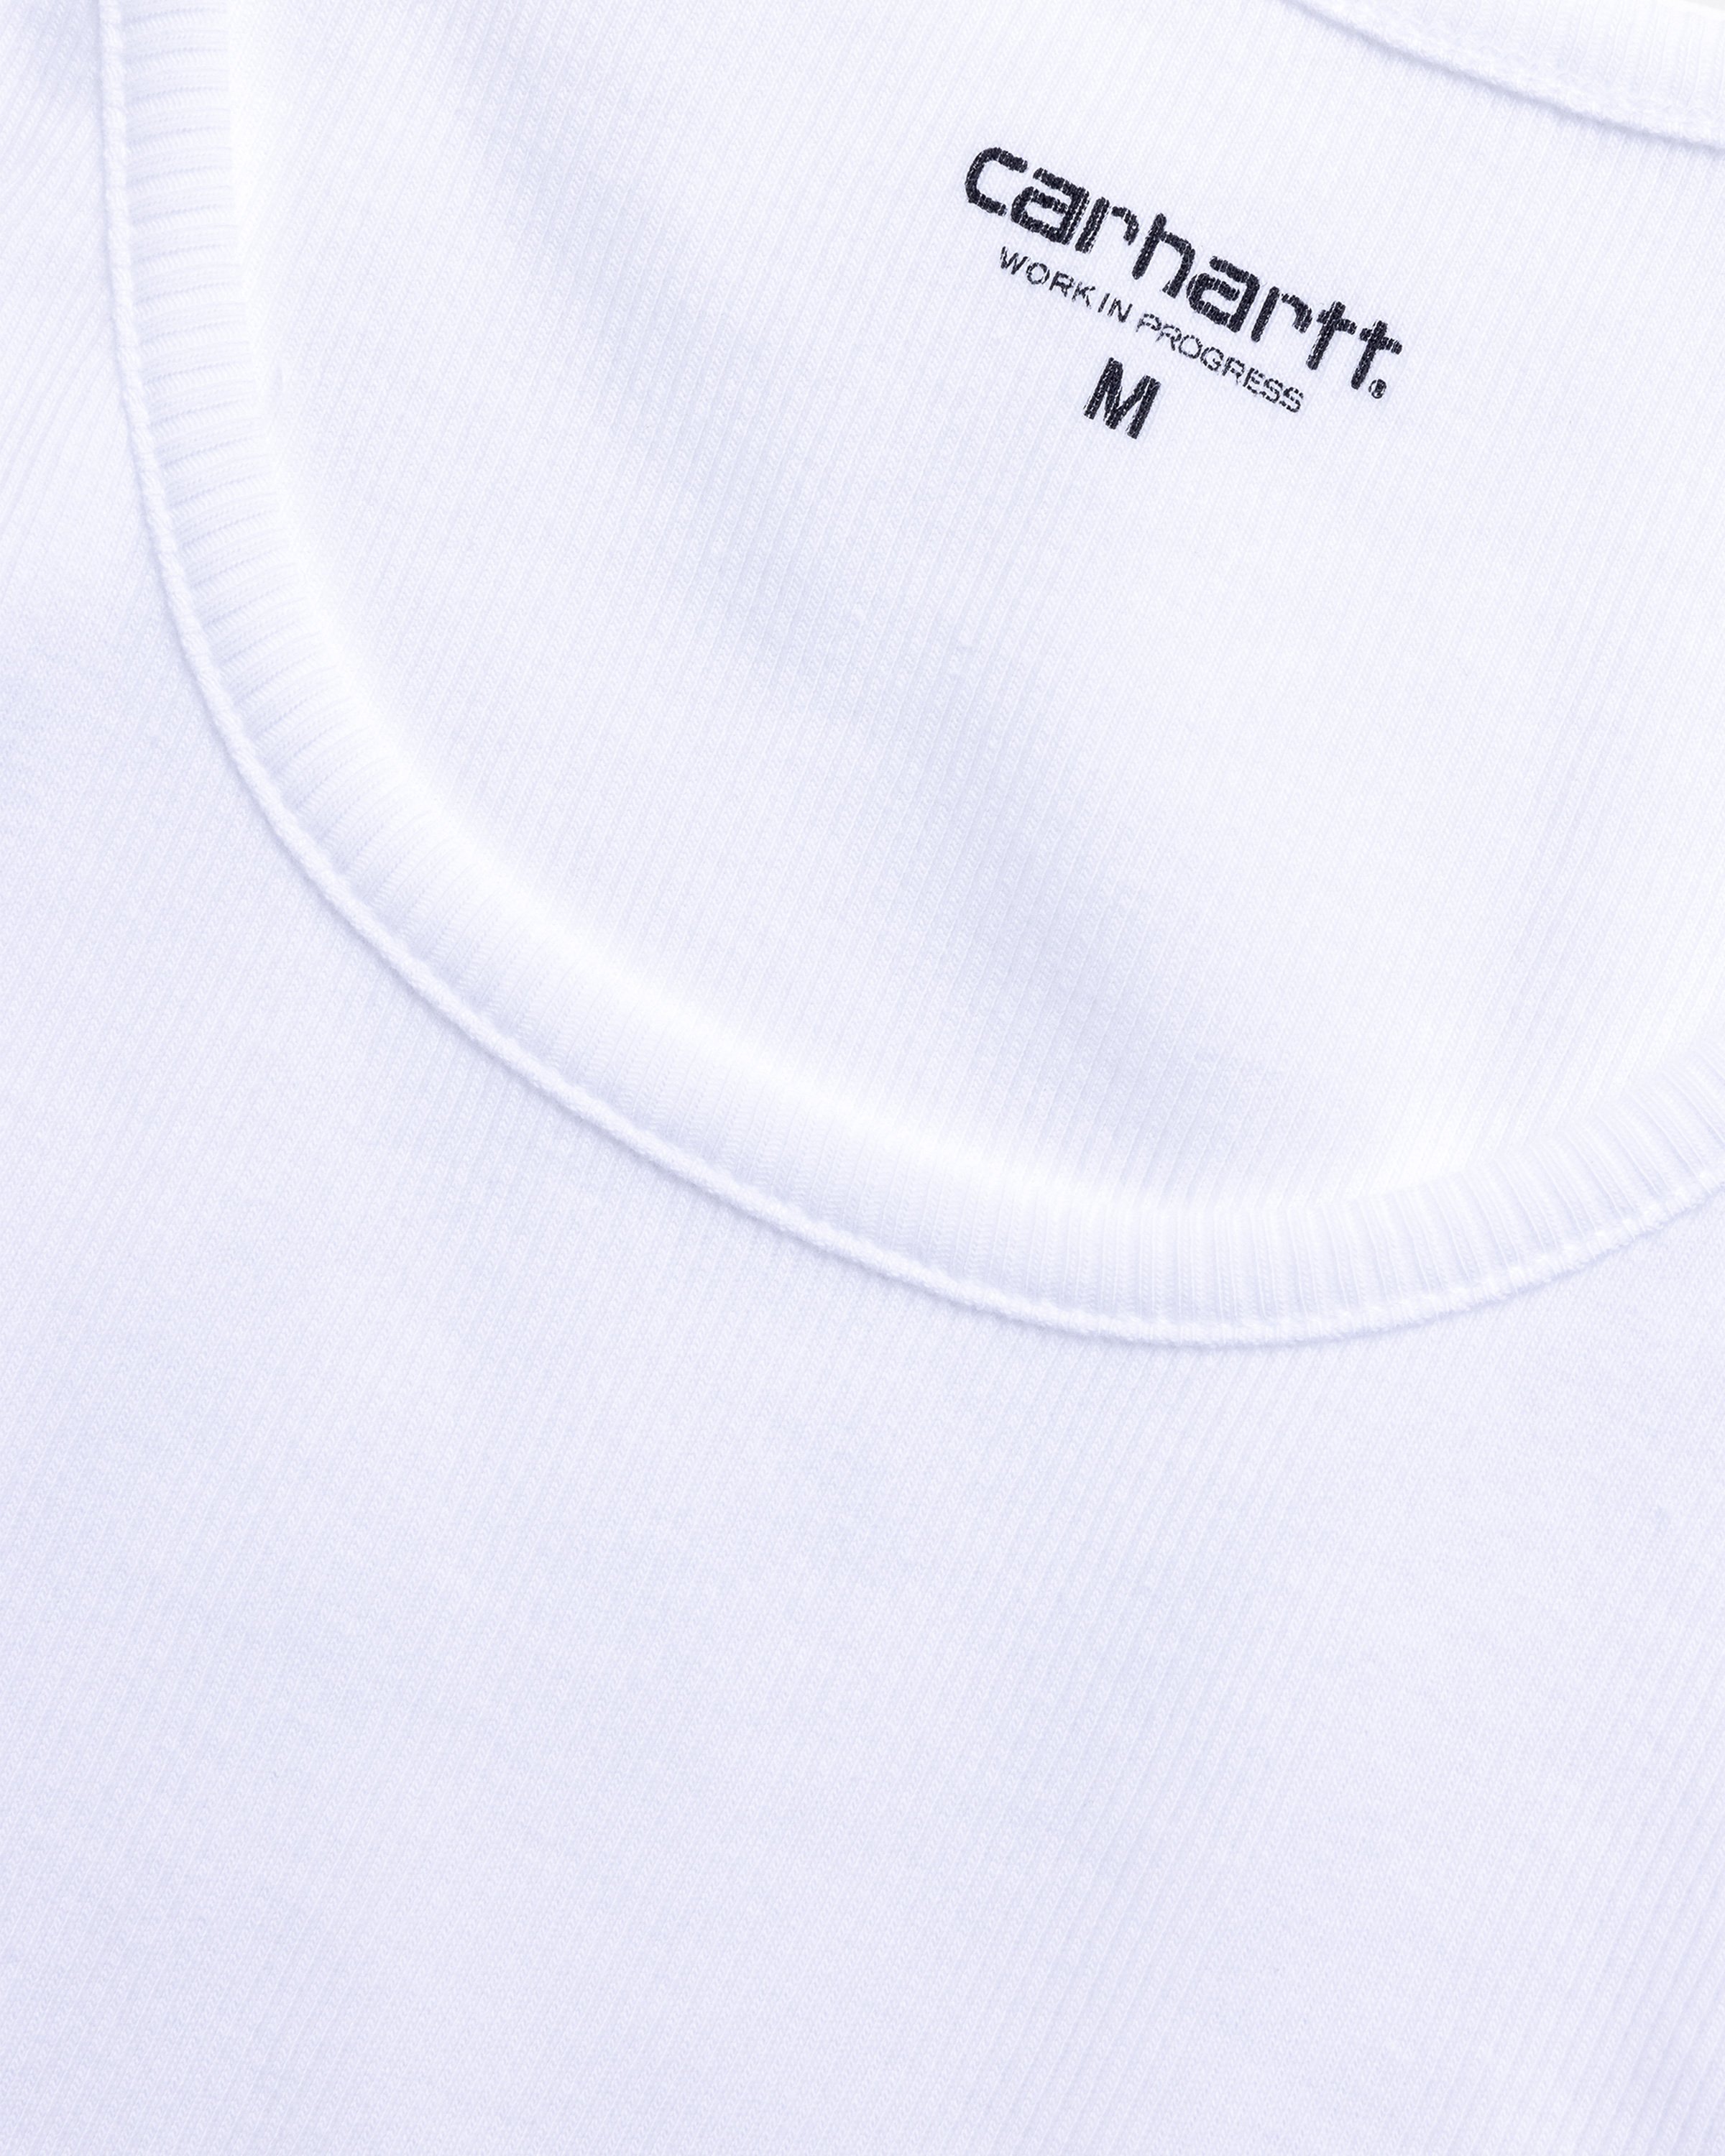 Carhartt WIP - AShirt White + White - Clothing - White - Image 6